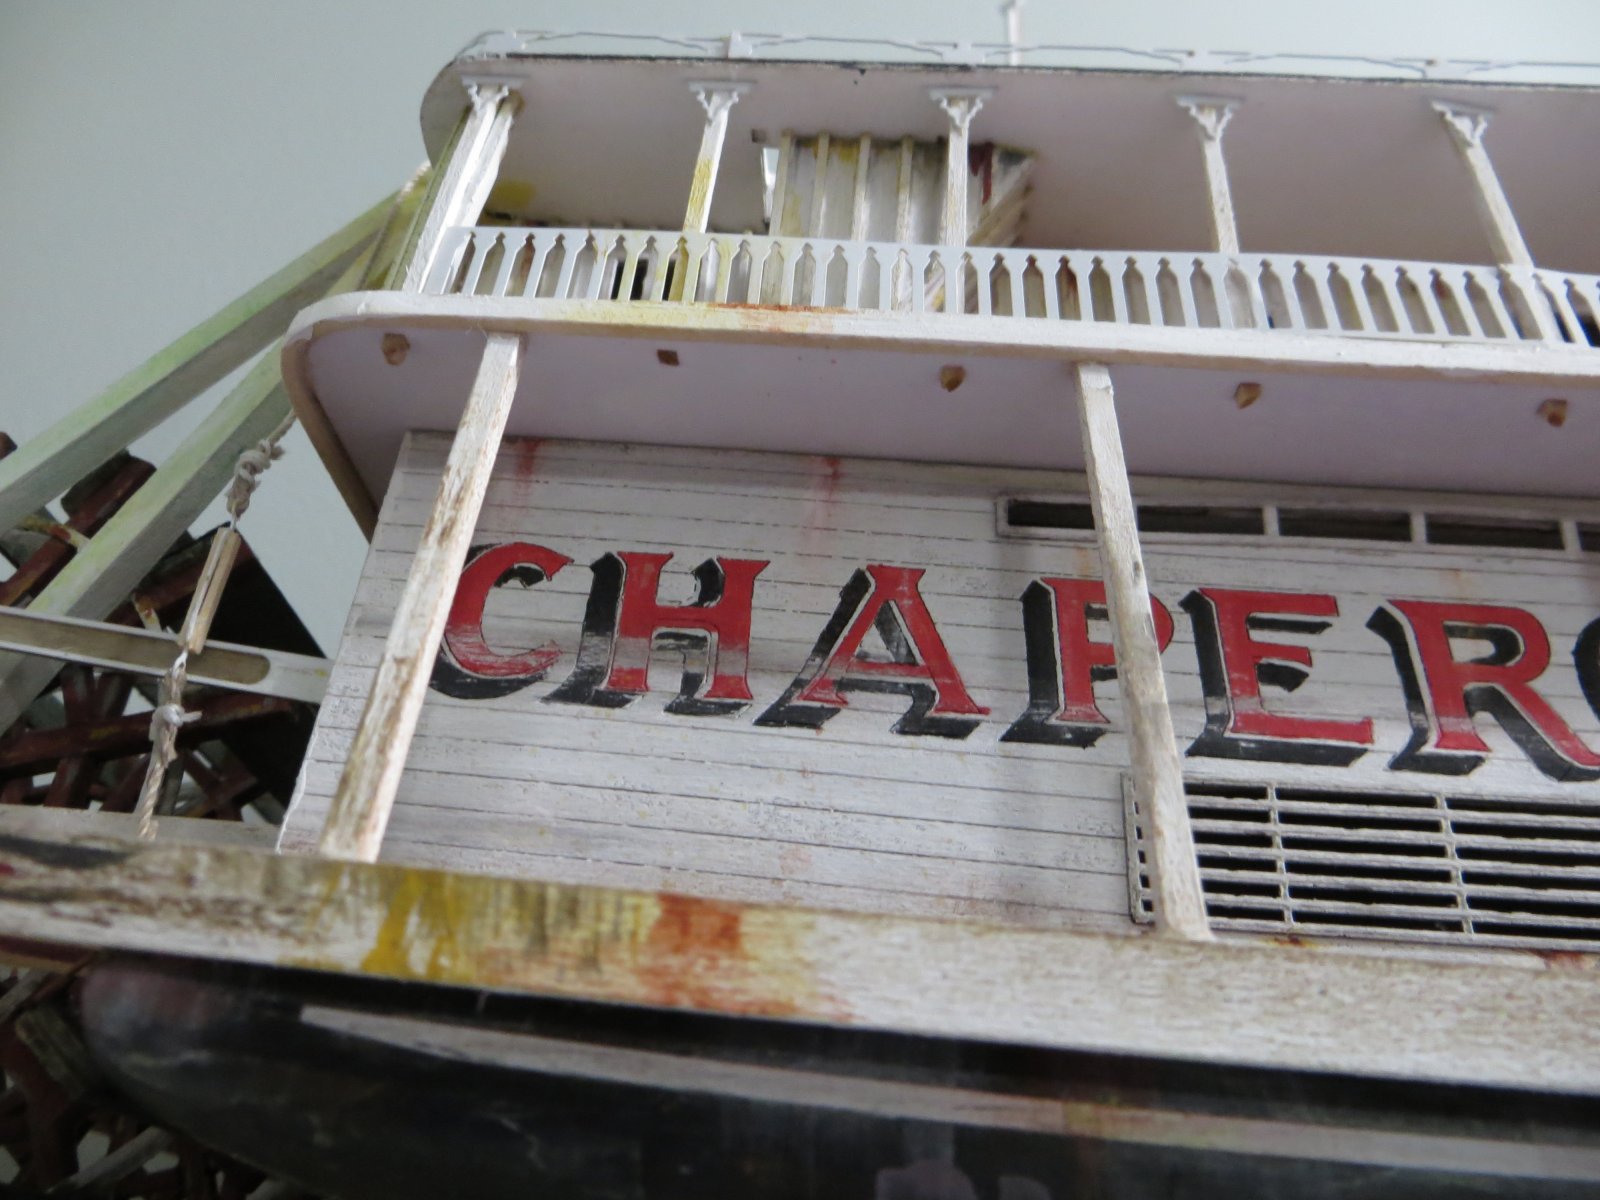 Chaperon Sternwheel Riverboat